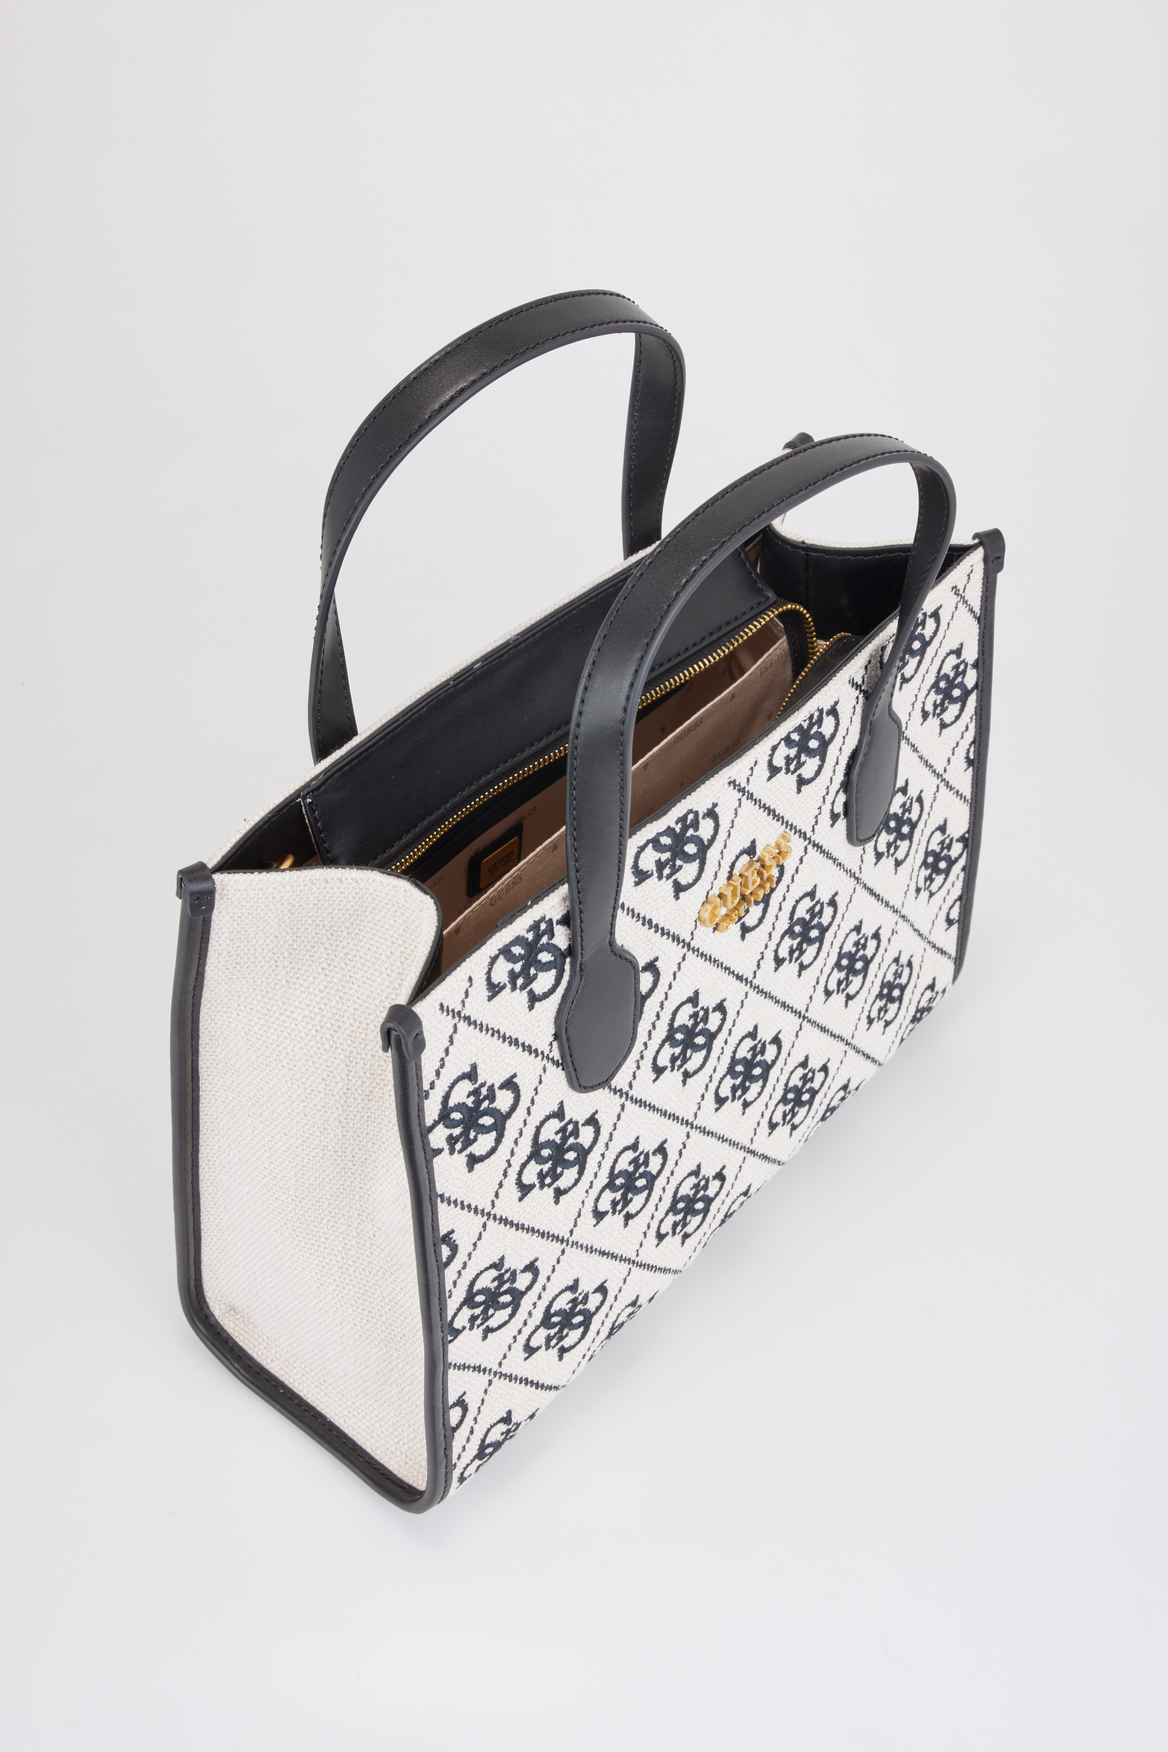 Guess Silvana Multi Compartment Tote Bag – Strandbags New Zealand